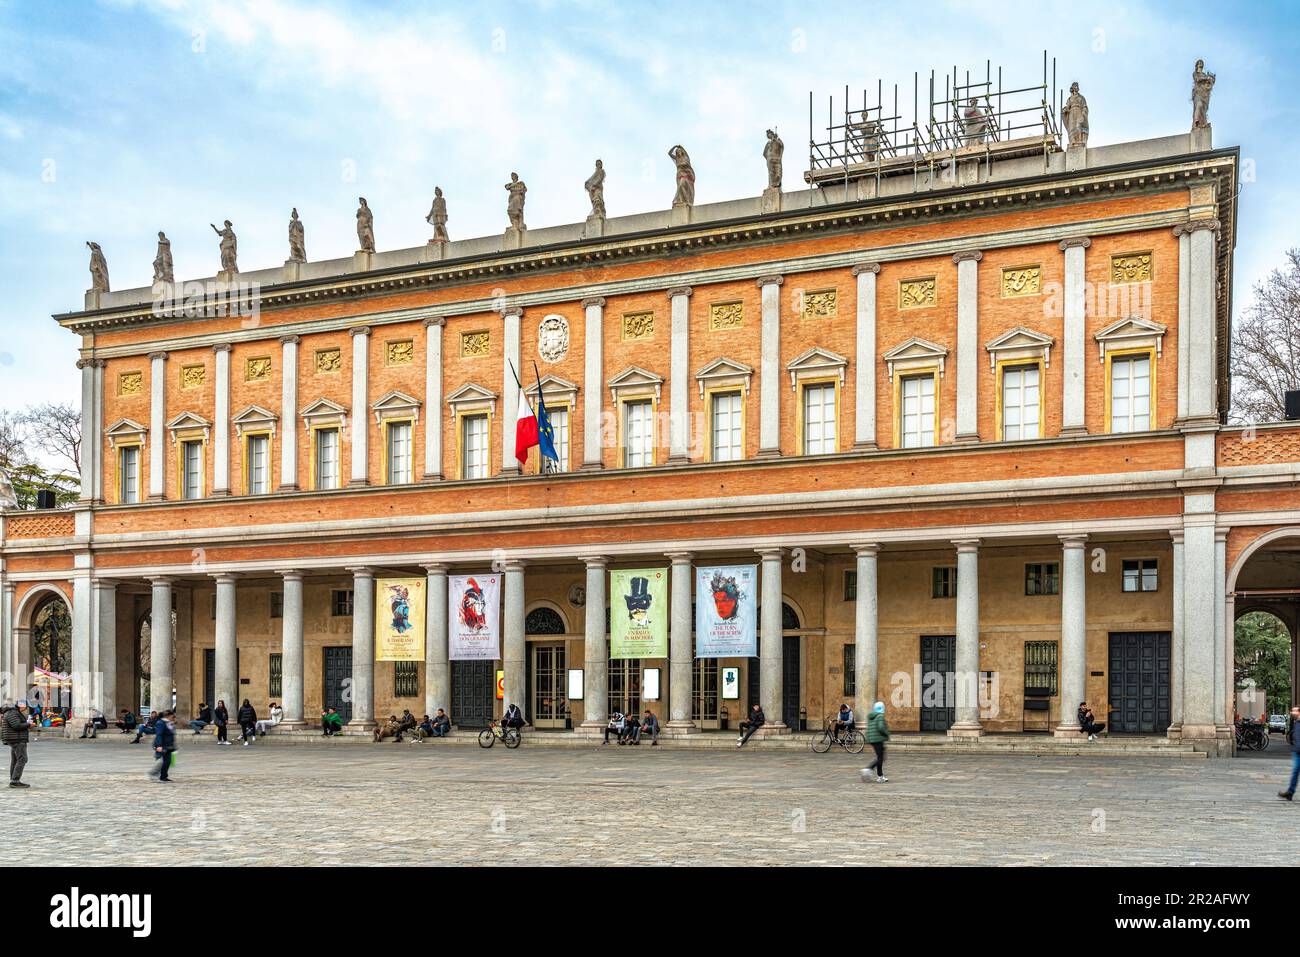 Romolo Valli Stadttheater ein neoklassizistisches Gebäude aus dem 19. Jahrhundert mit reich verzierten Innenräumen. Reggio Emilia, Emilia Romagna, Italien, Europa Stockfoto